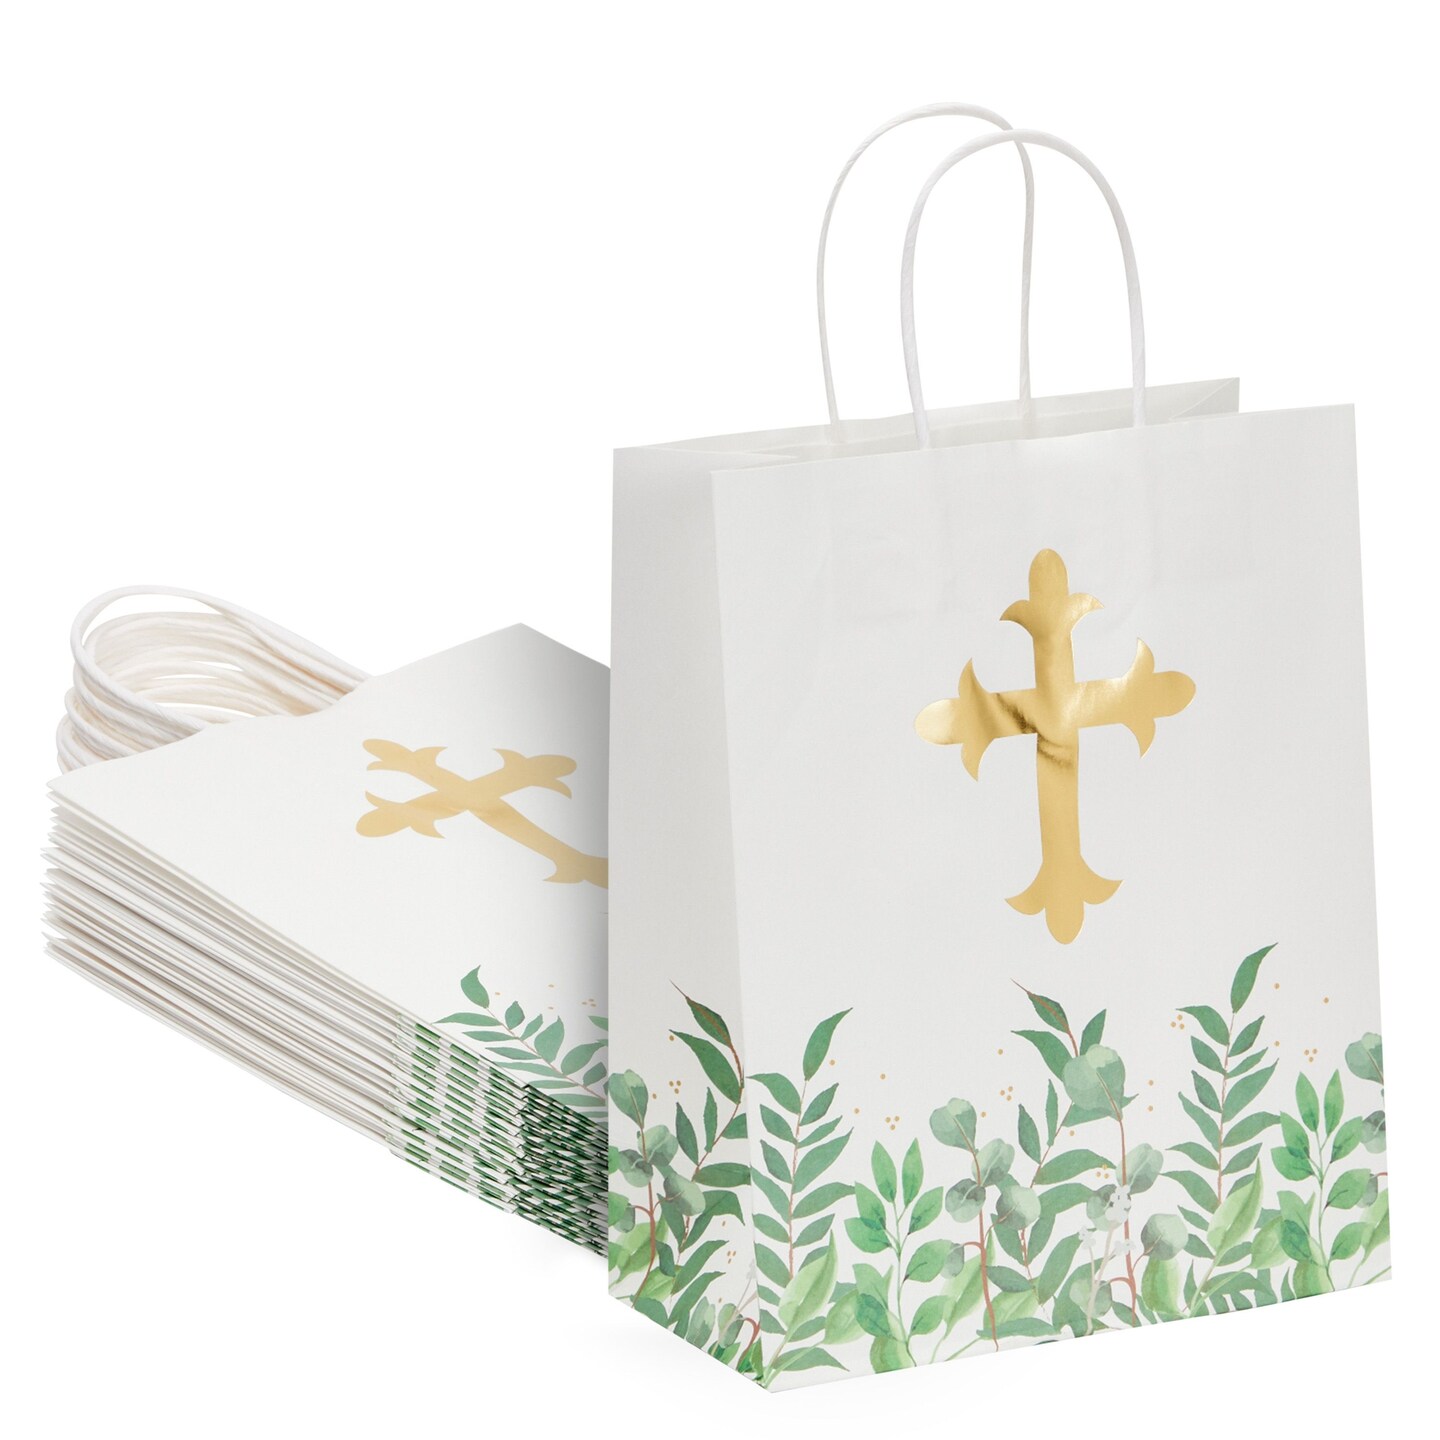 Large Gift Bag #50: Hallmark Large Gift Bag with Tissue Paper